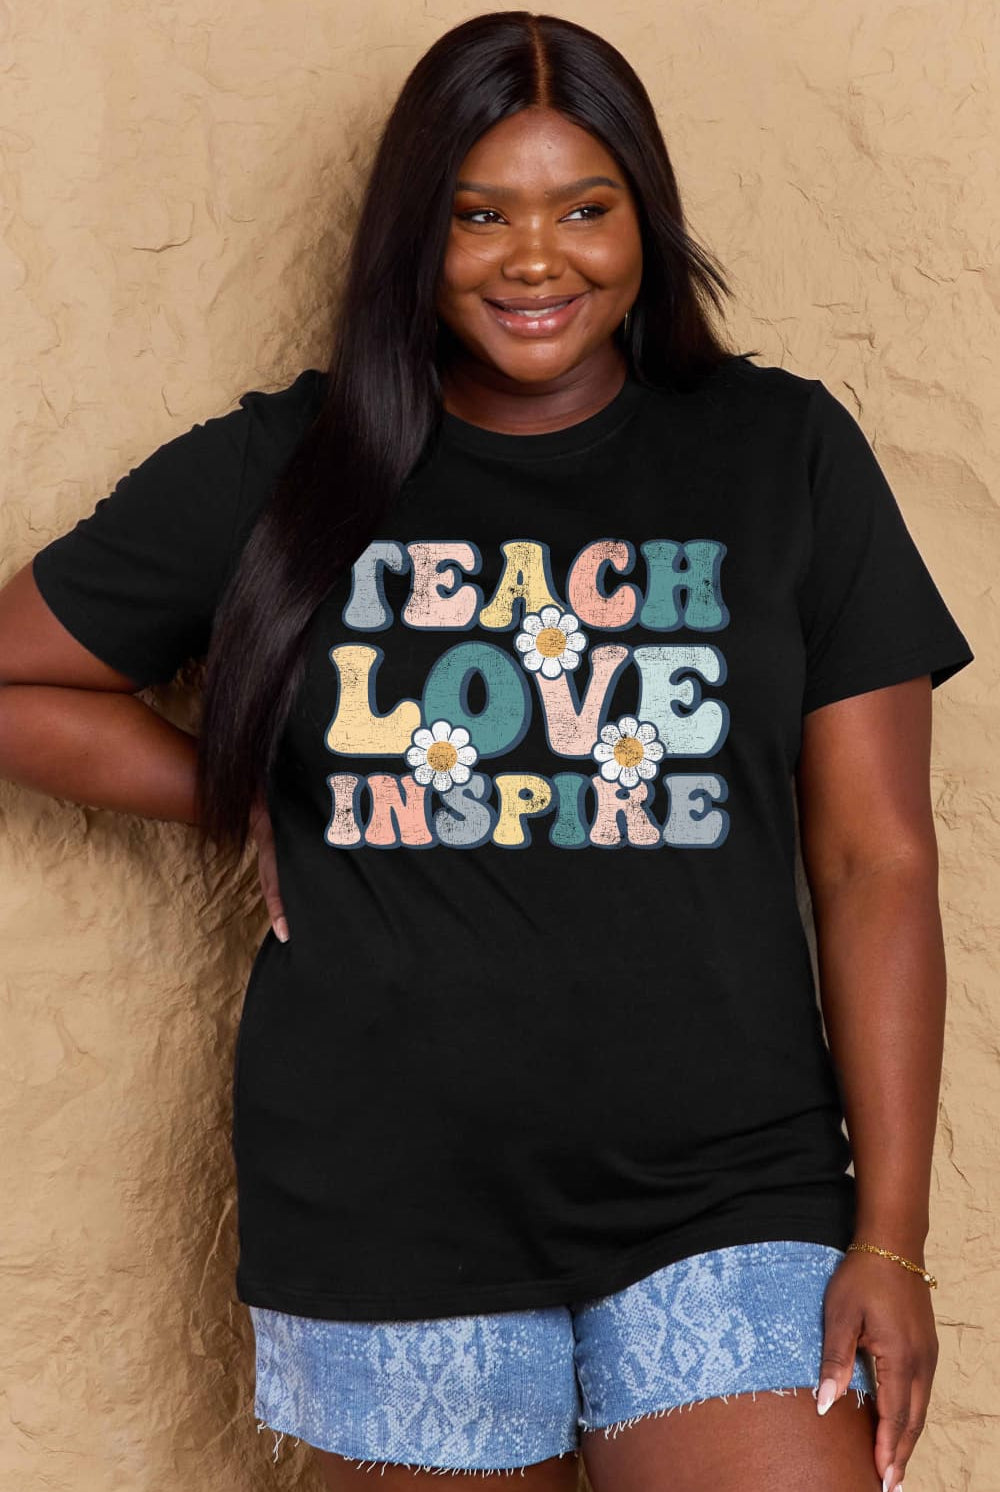 Tan TEACH LOVE INSPIRE Graphic Cotton T-Shirt Graphic Tees